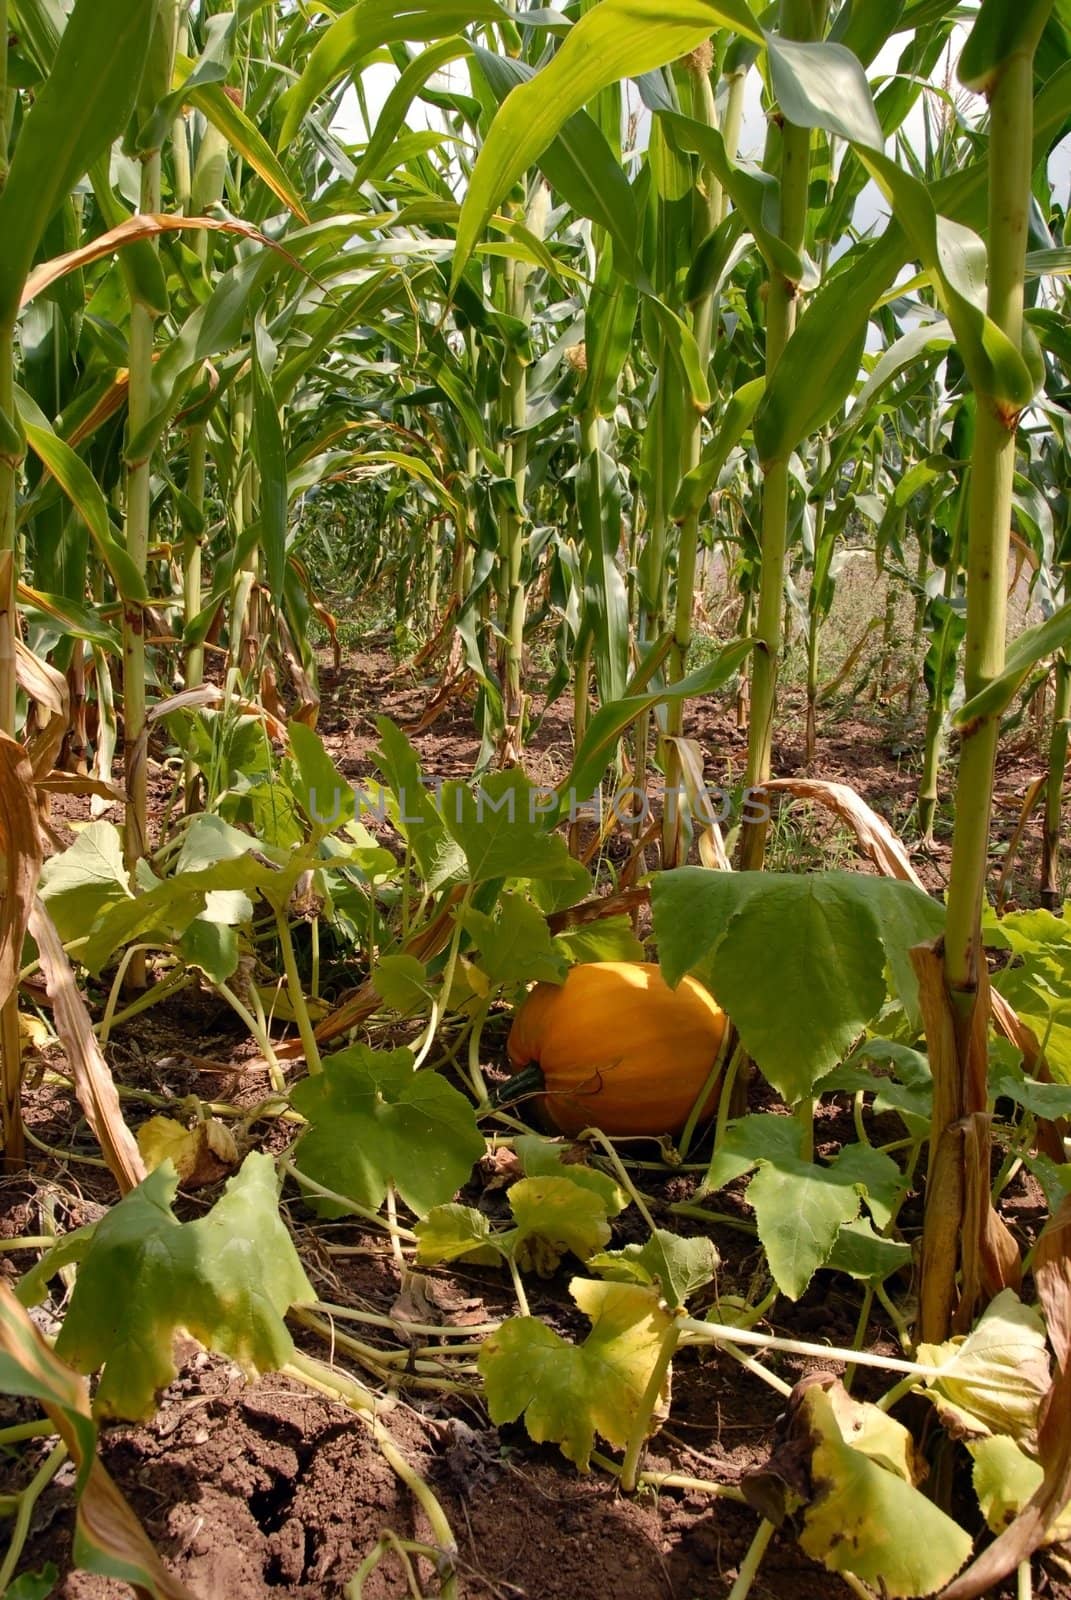 Growing pumpkin in corn by simply